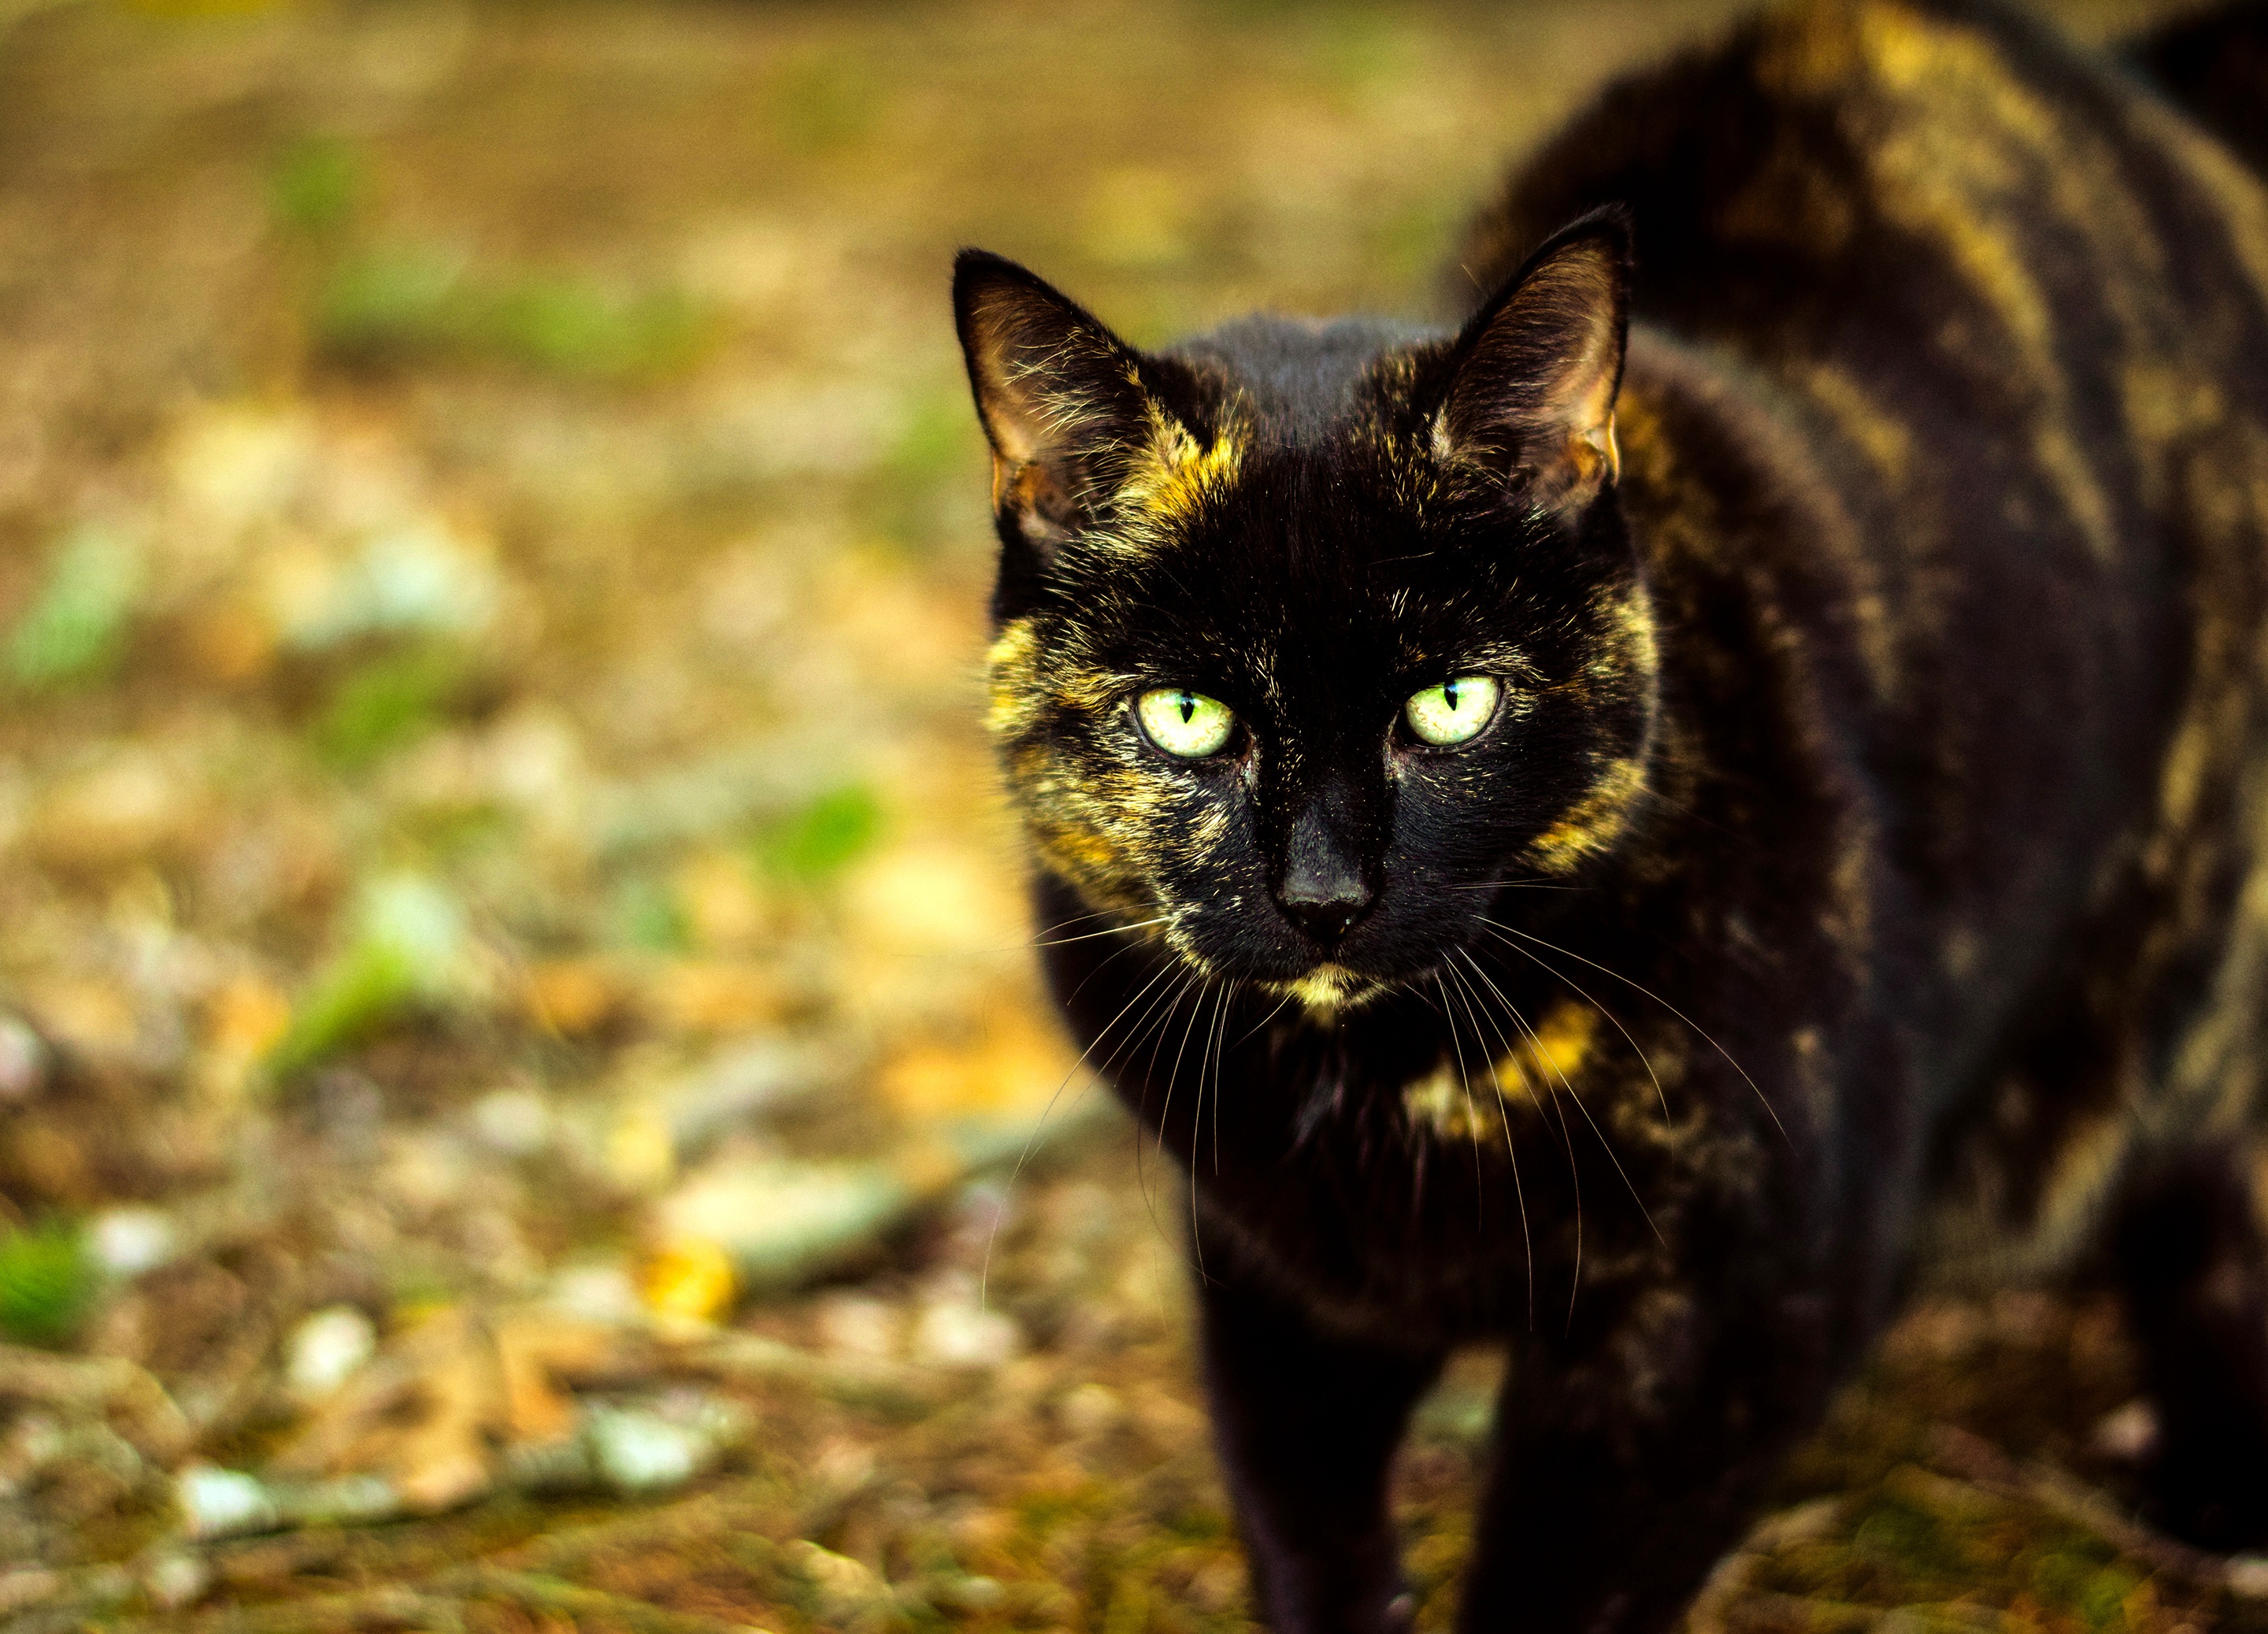 Пестрый кот. Крапчатый бурый кот. Бурая черепаховая кошка. Крапчатый черный кот. Черная кошка.